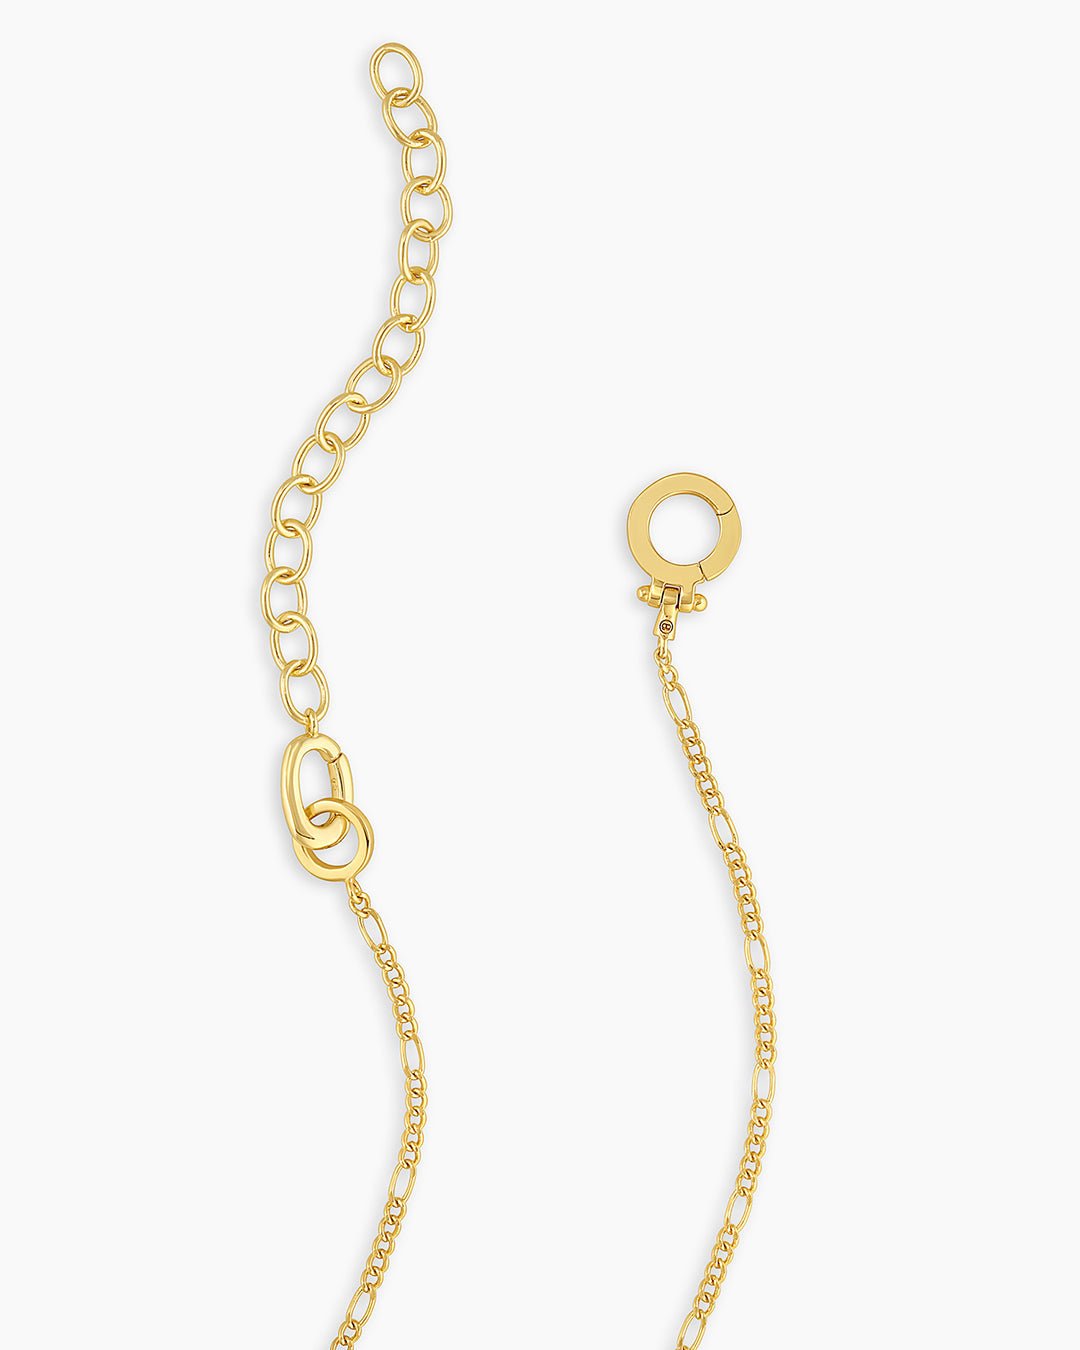  2 link necklace extender || option::Gold Plated